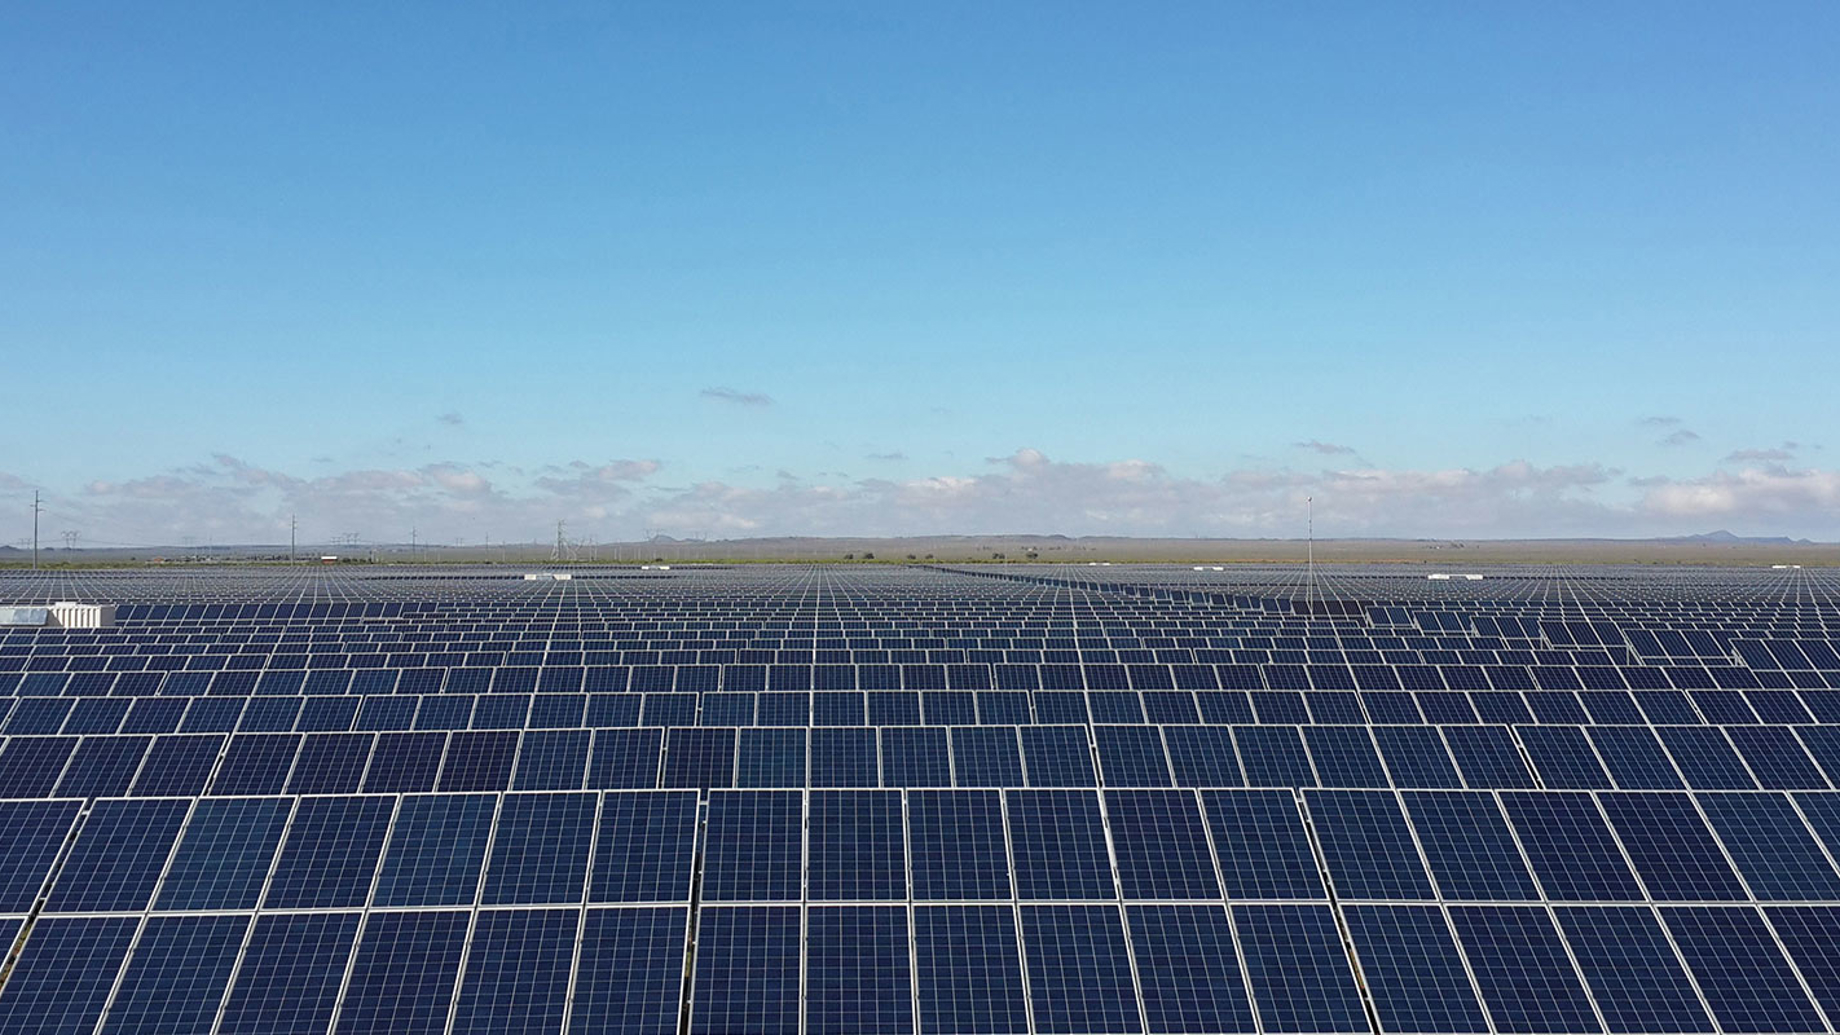 SCDA3 solar power plant in South Africa